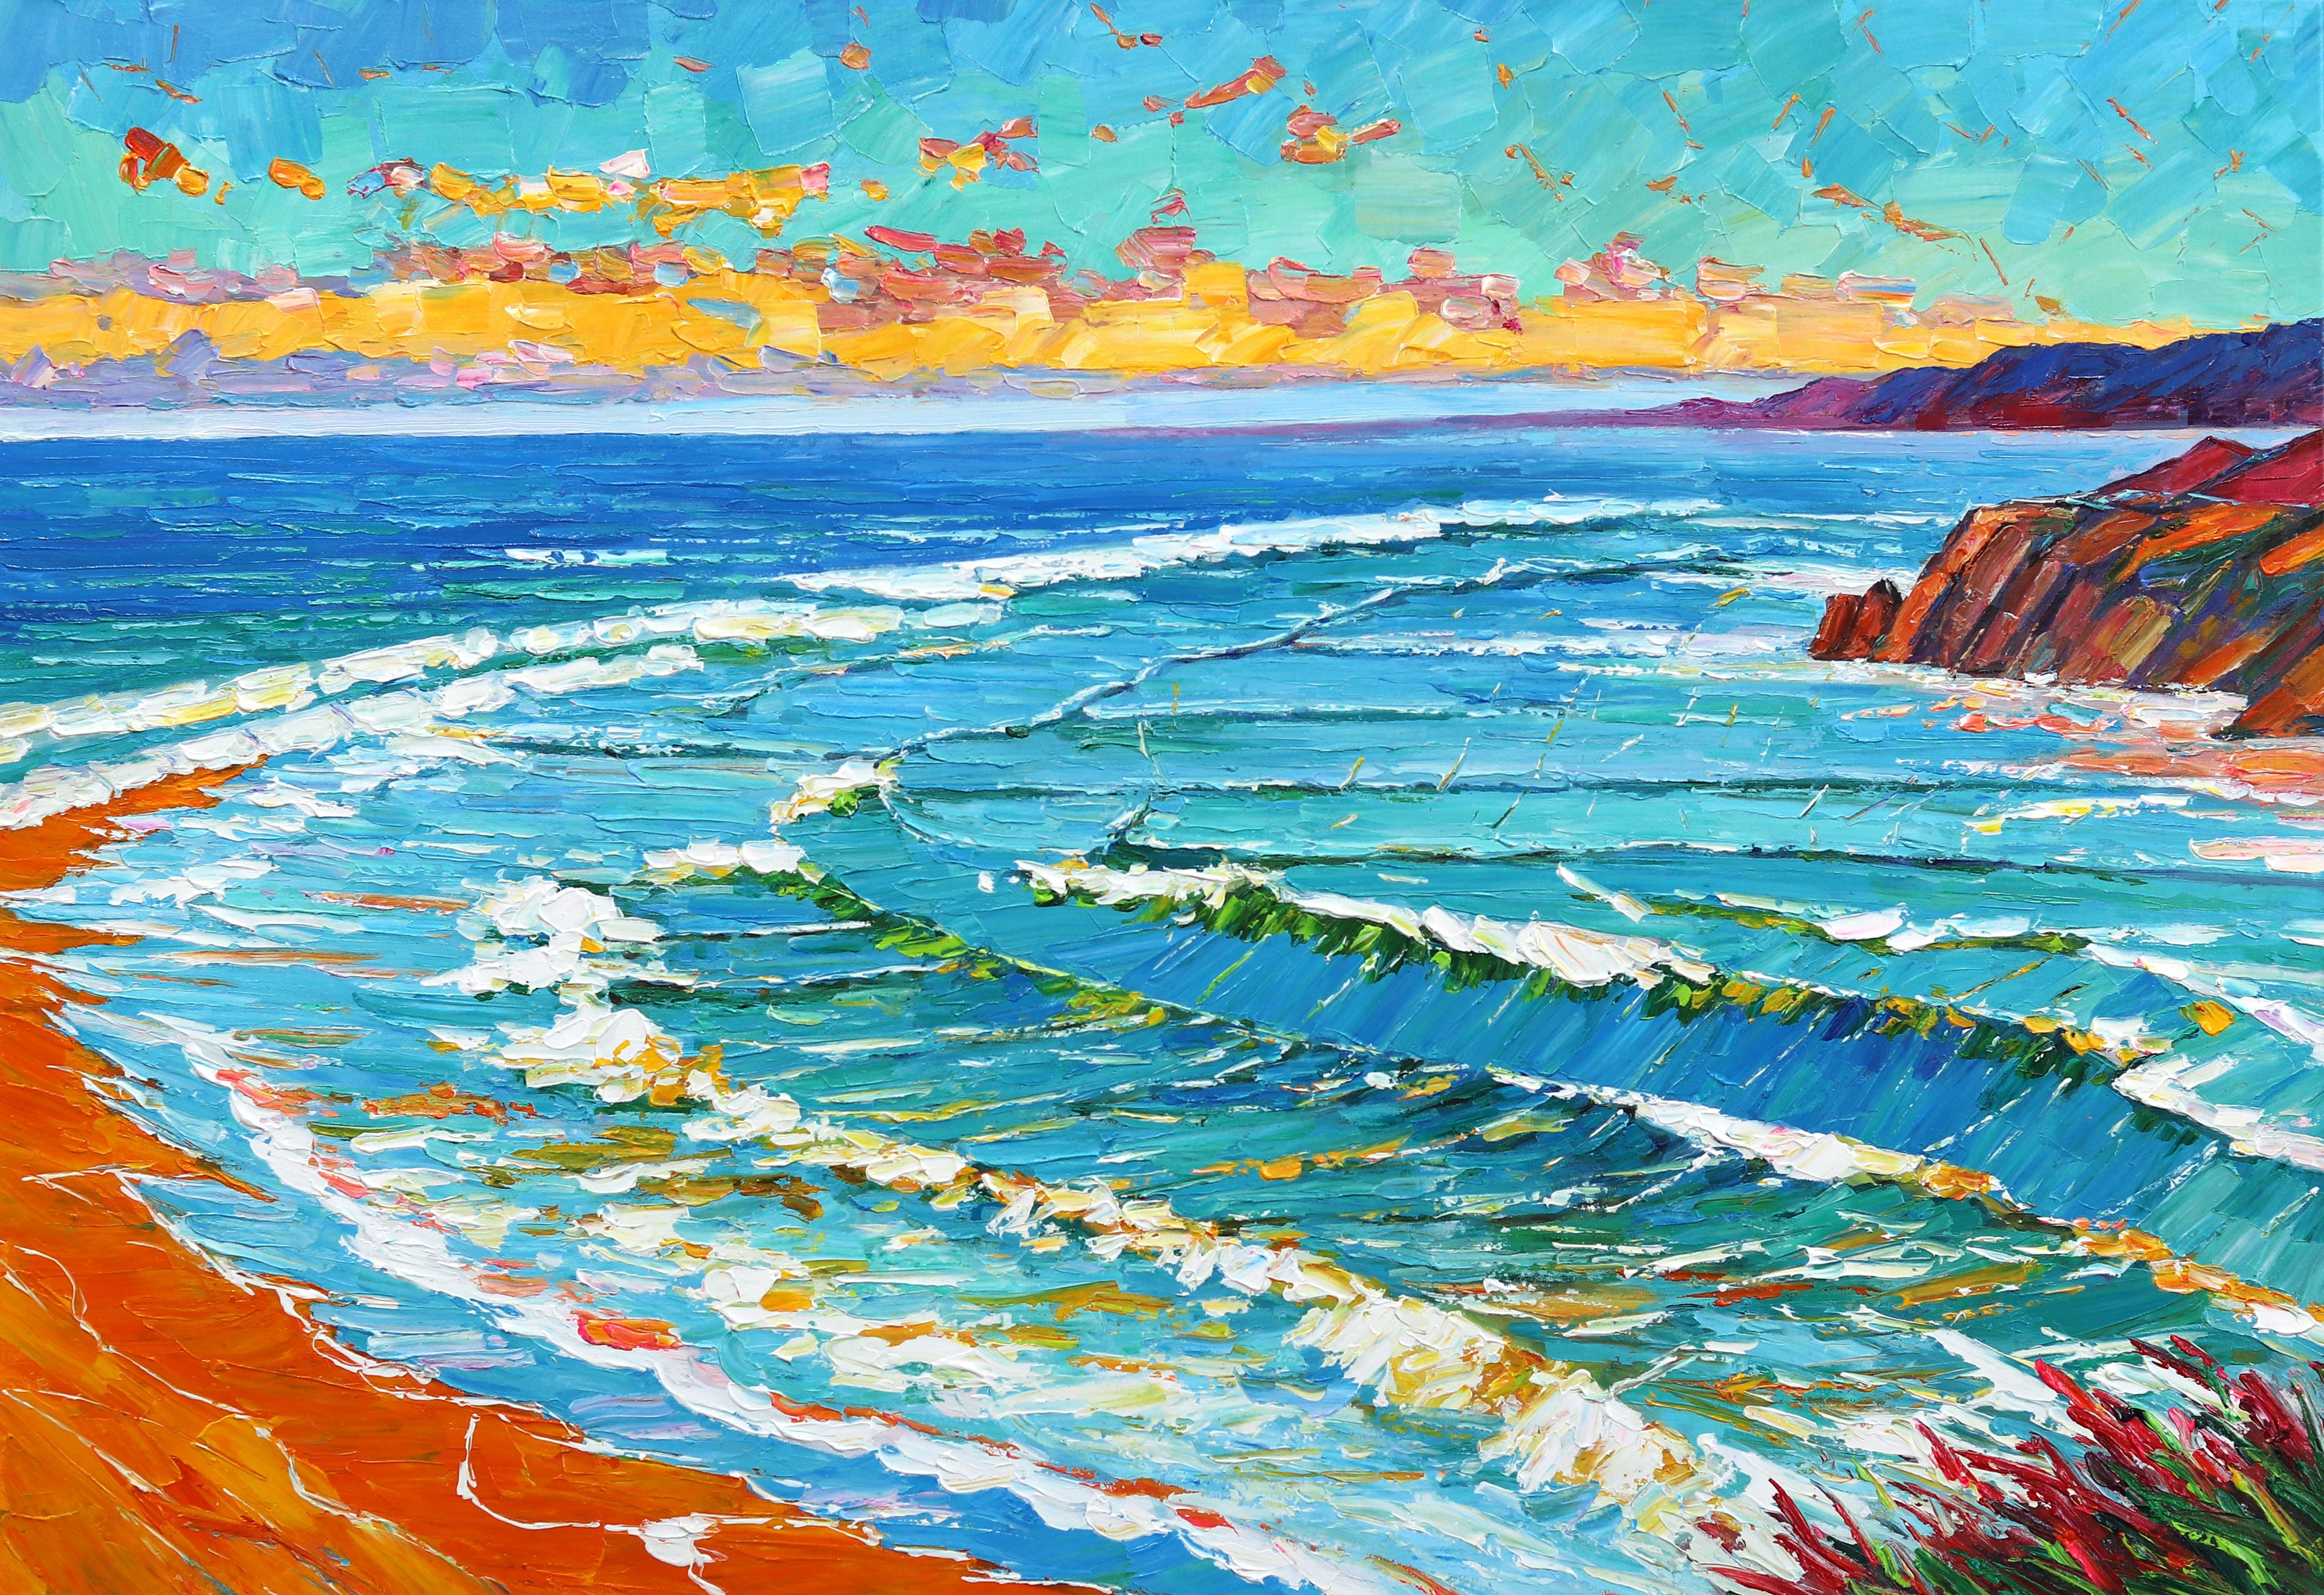 Katharina Husslein Landscape Painting - "Nothing But Blue Skies" Impressionist Landscape Ocean Impasto Painting